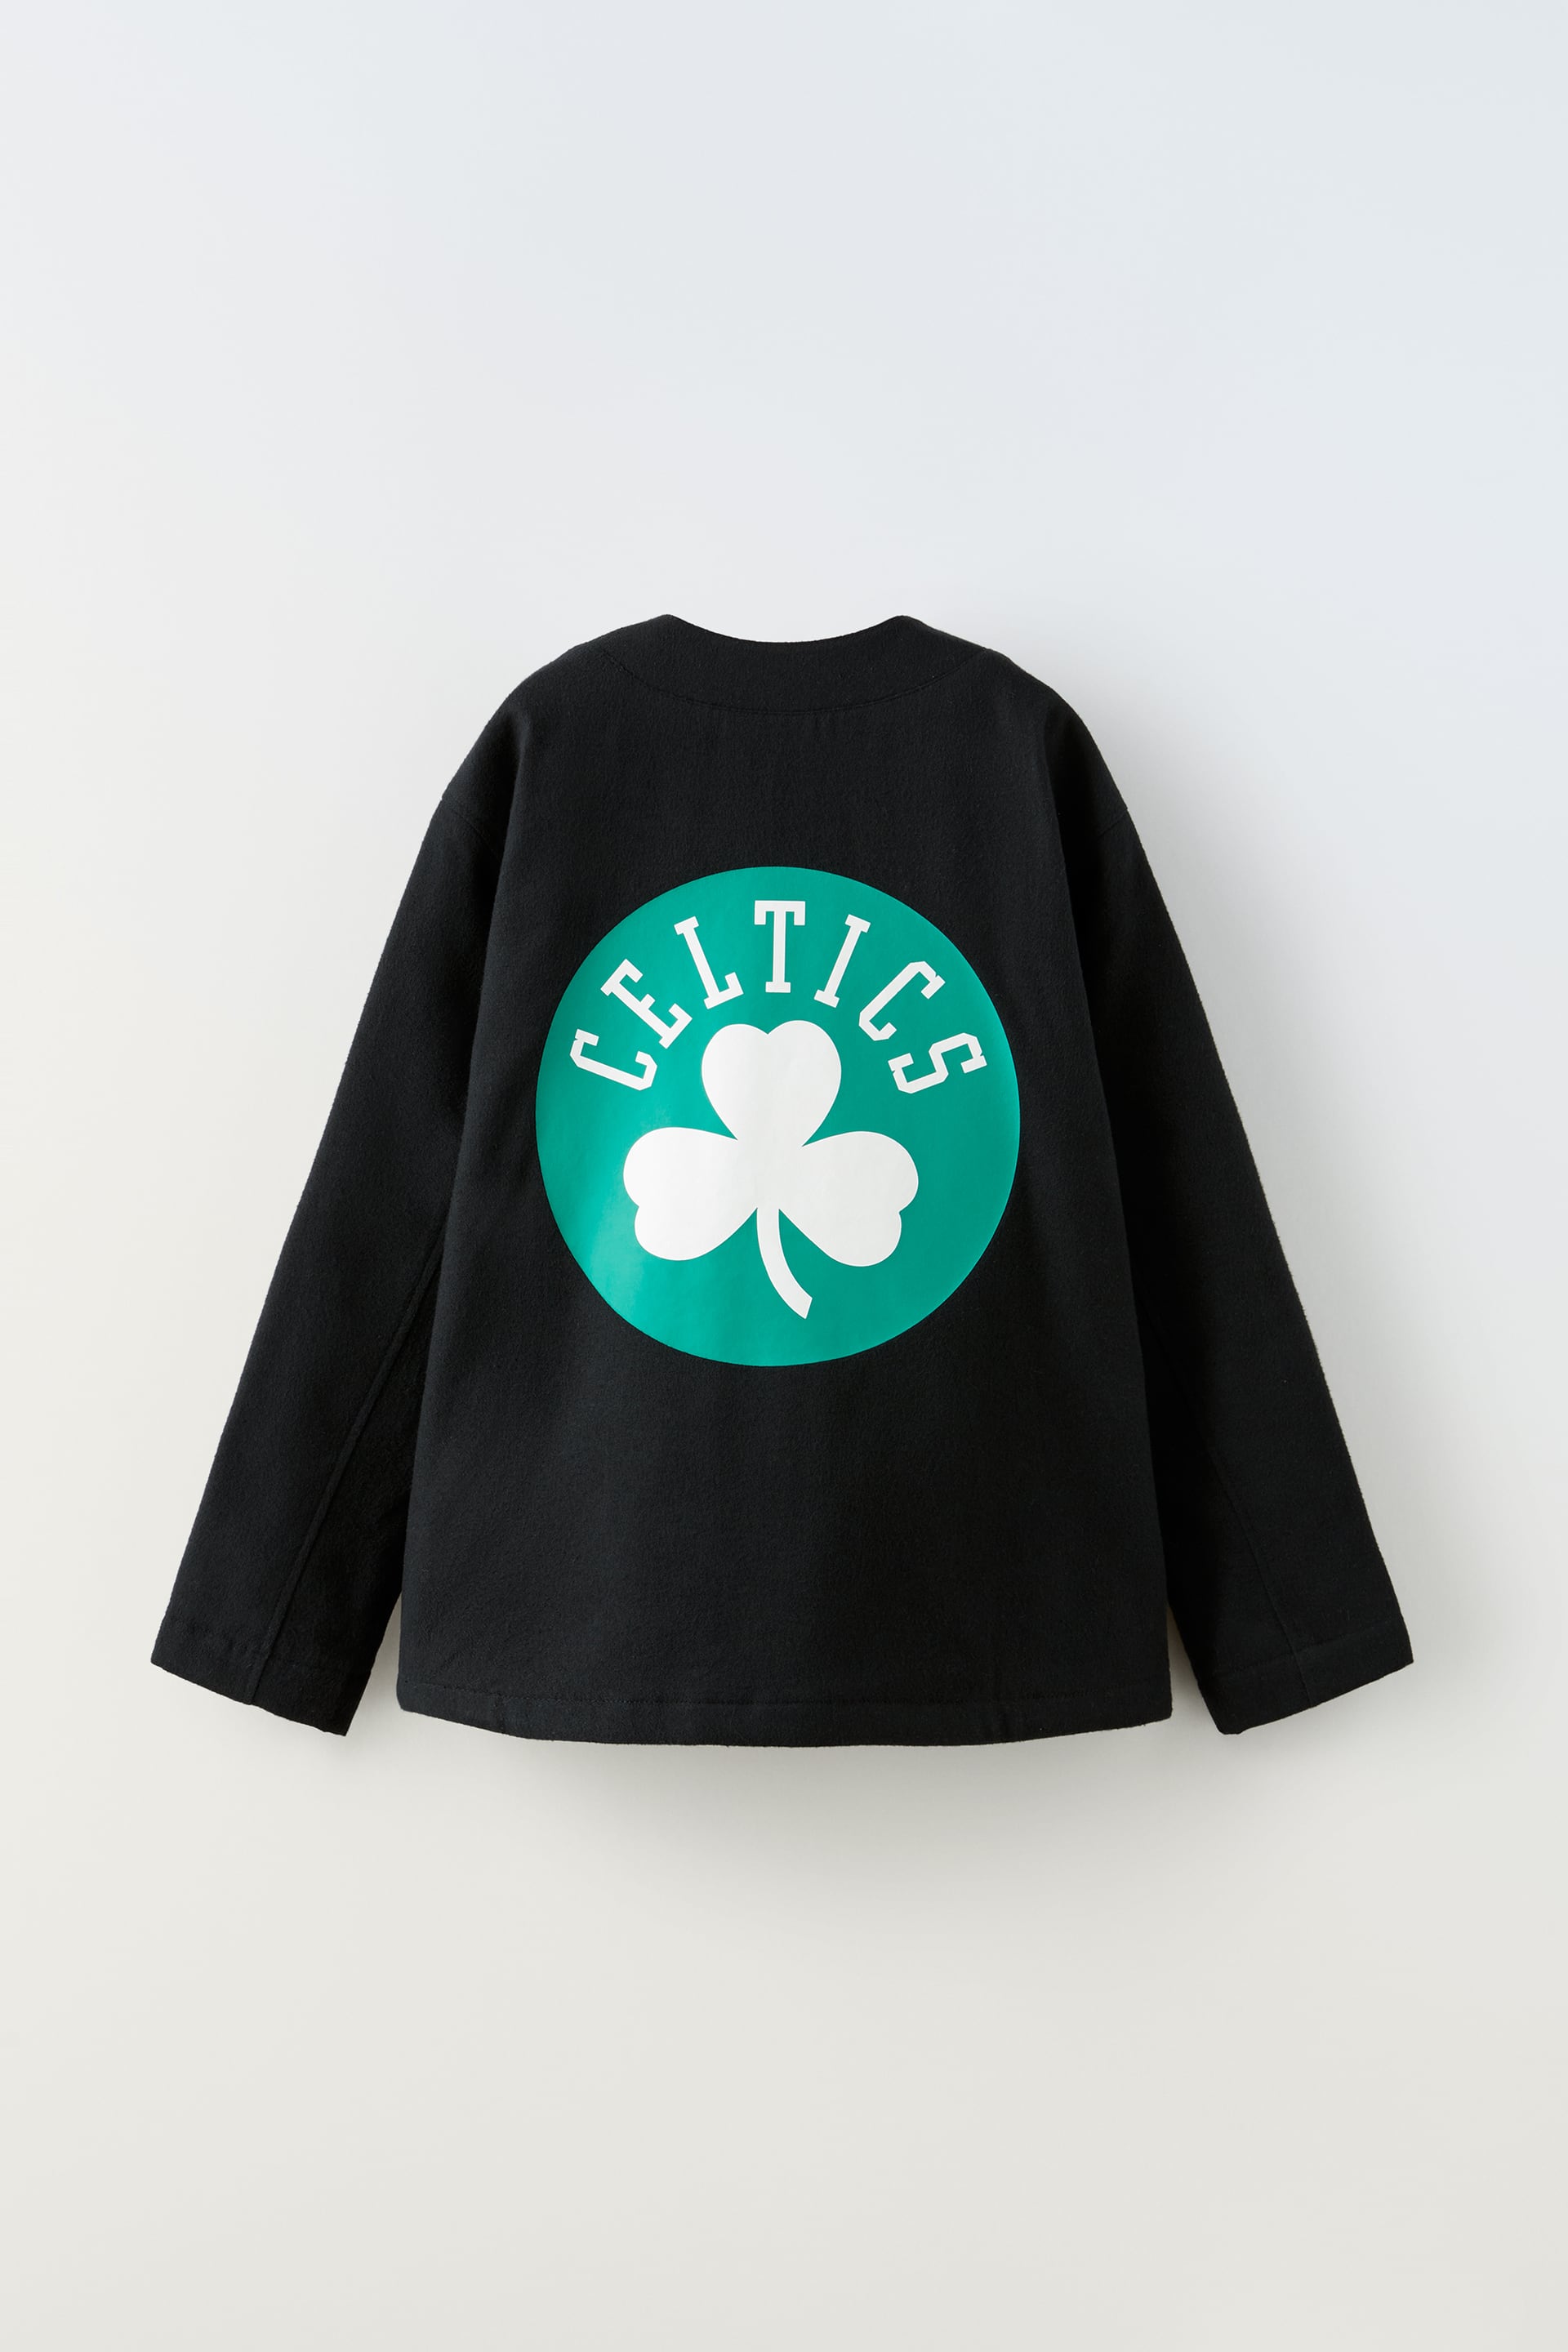 NBA Boston Celtics Black Hooded Hoodie Sweatshirt Jacket Youth